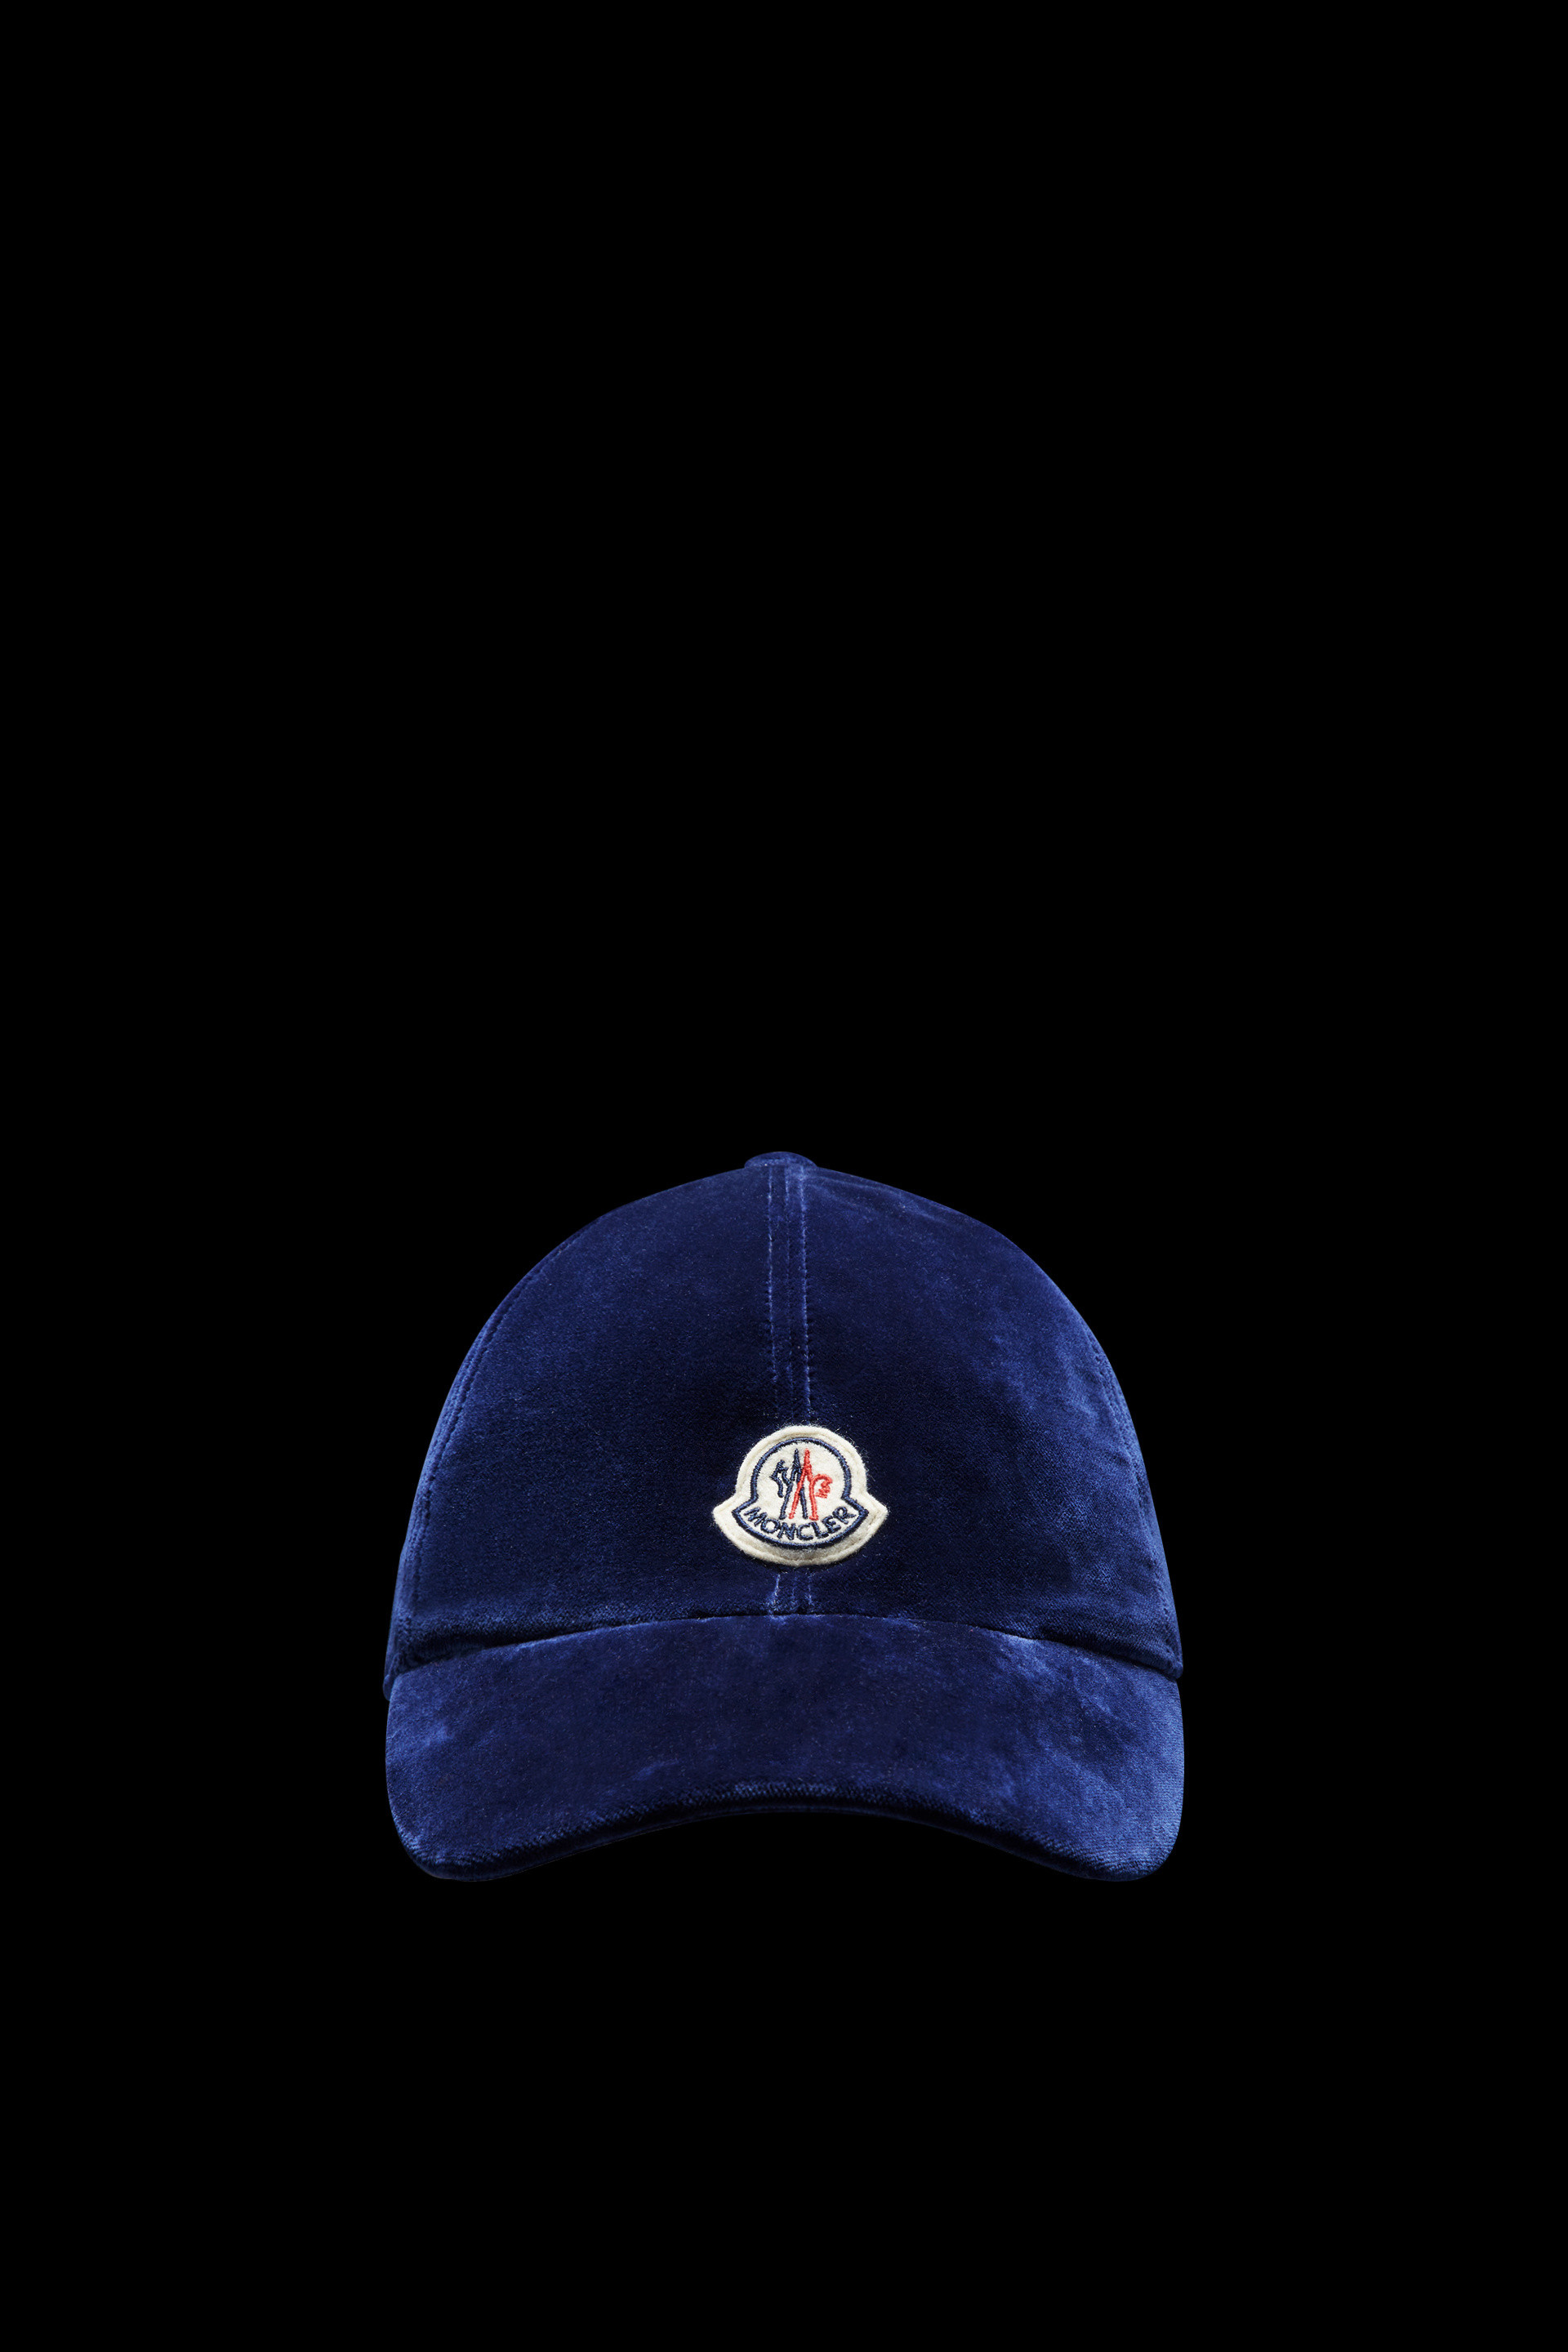 Moncler Women's Logo Baseball Cap